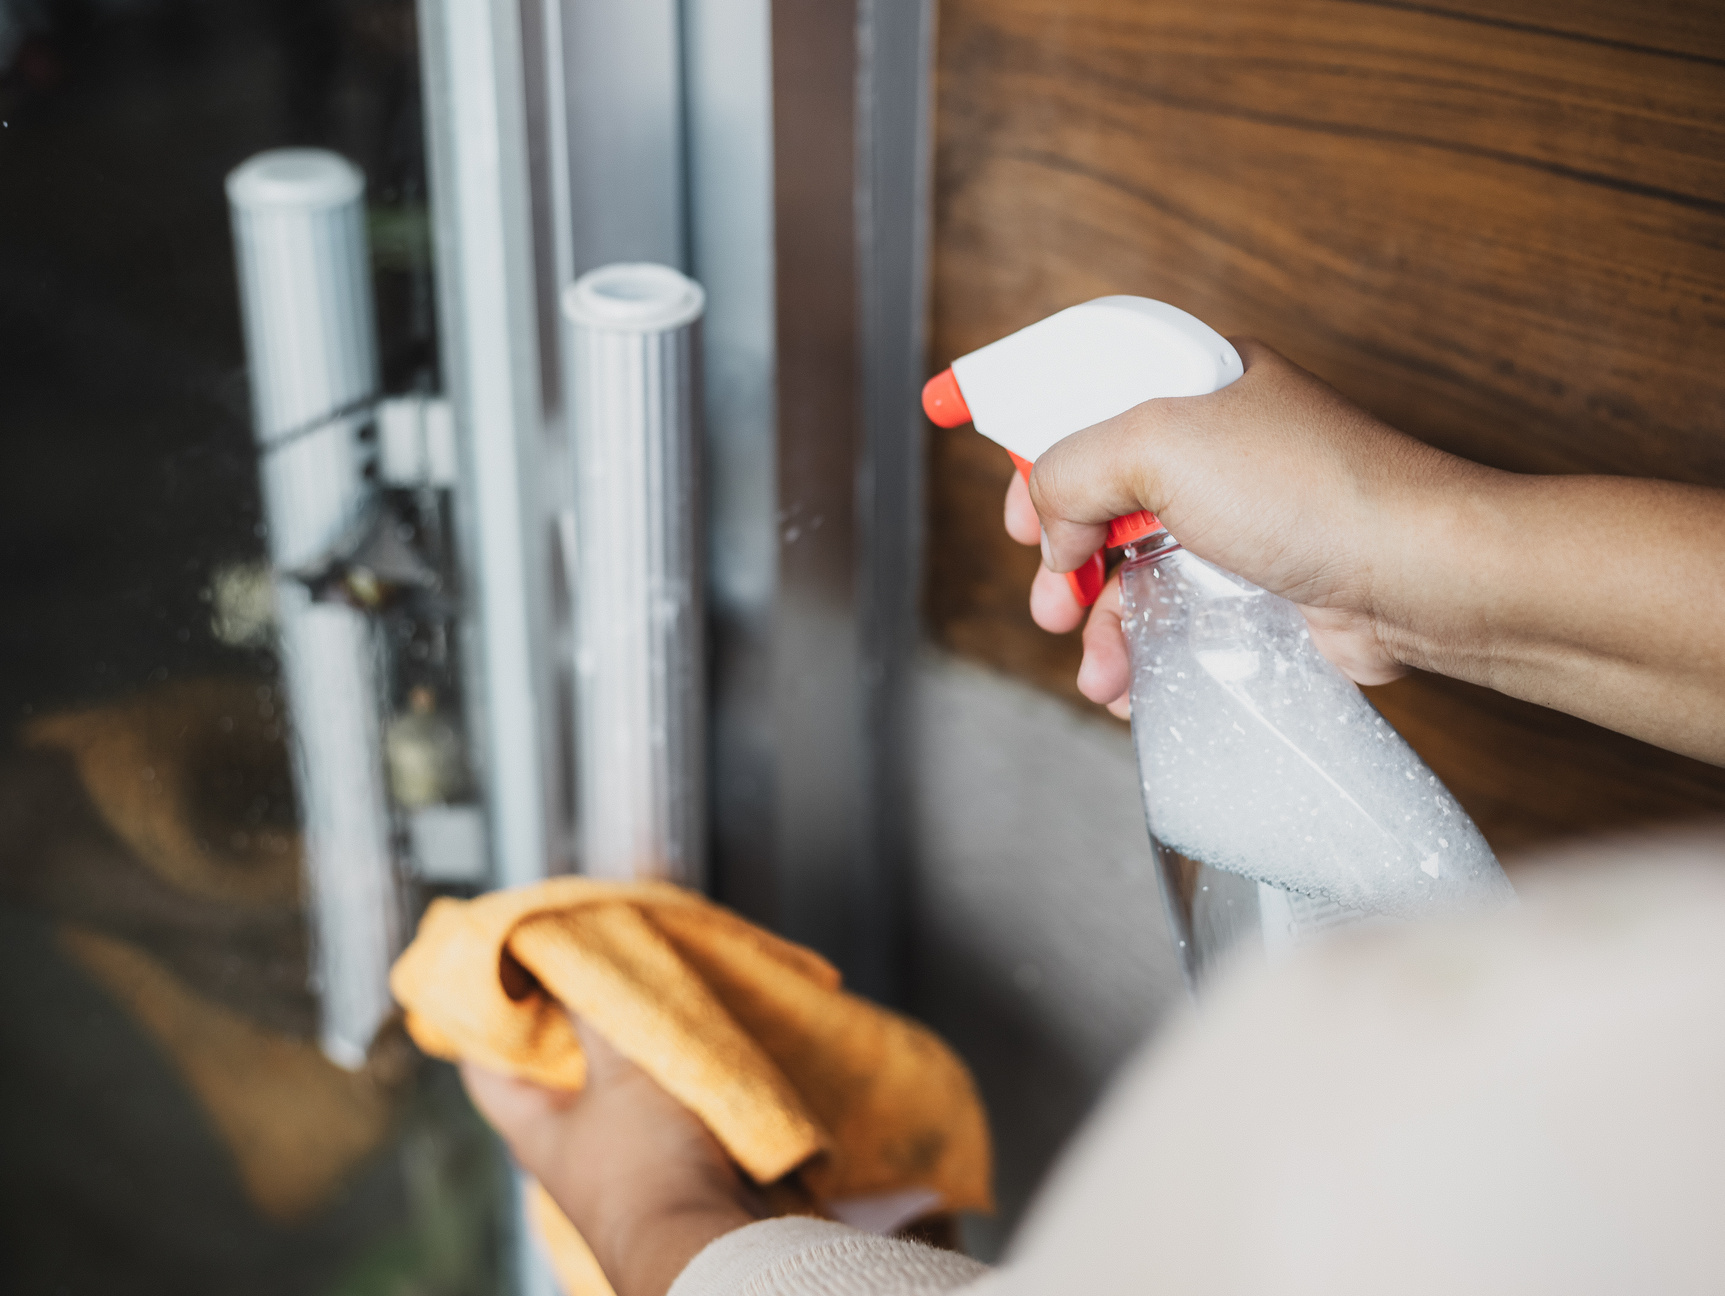 Cleaner Sanitizing Door Handle with Rag and Detergent Spray